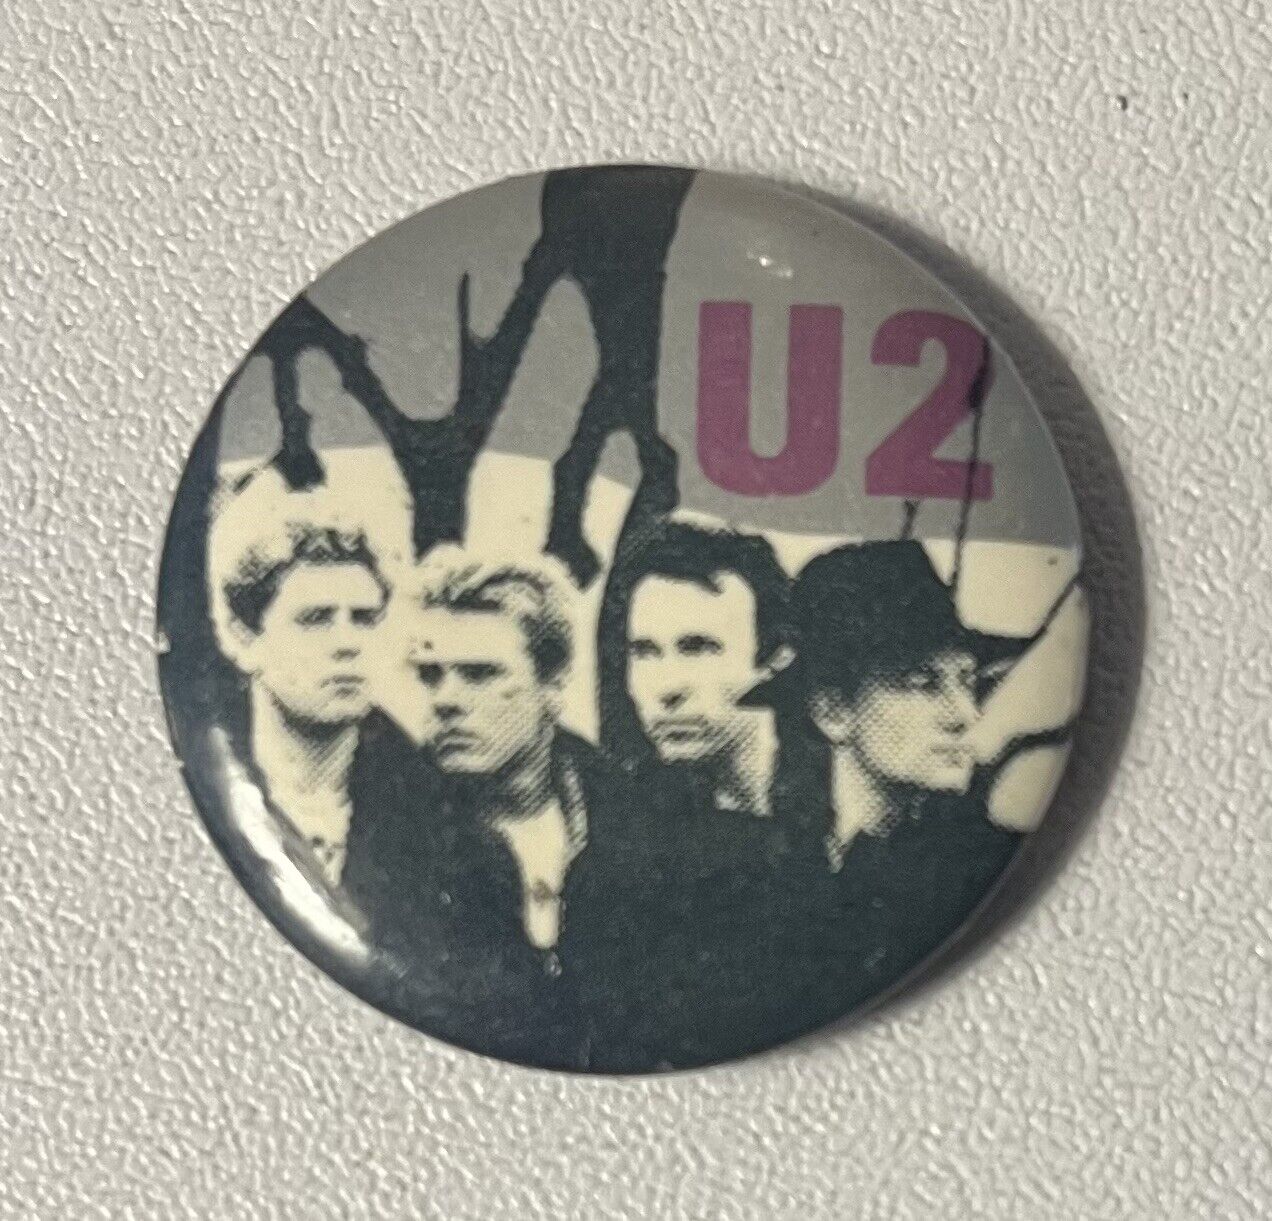 Old U2 Concert Pin Pin back